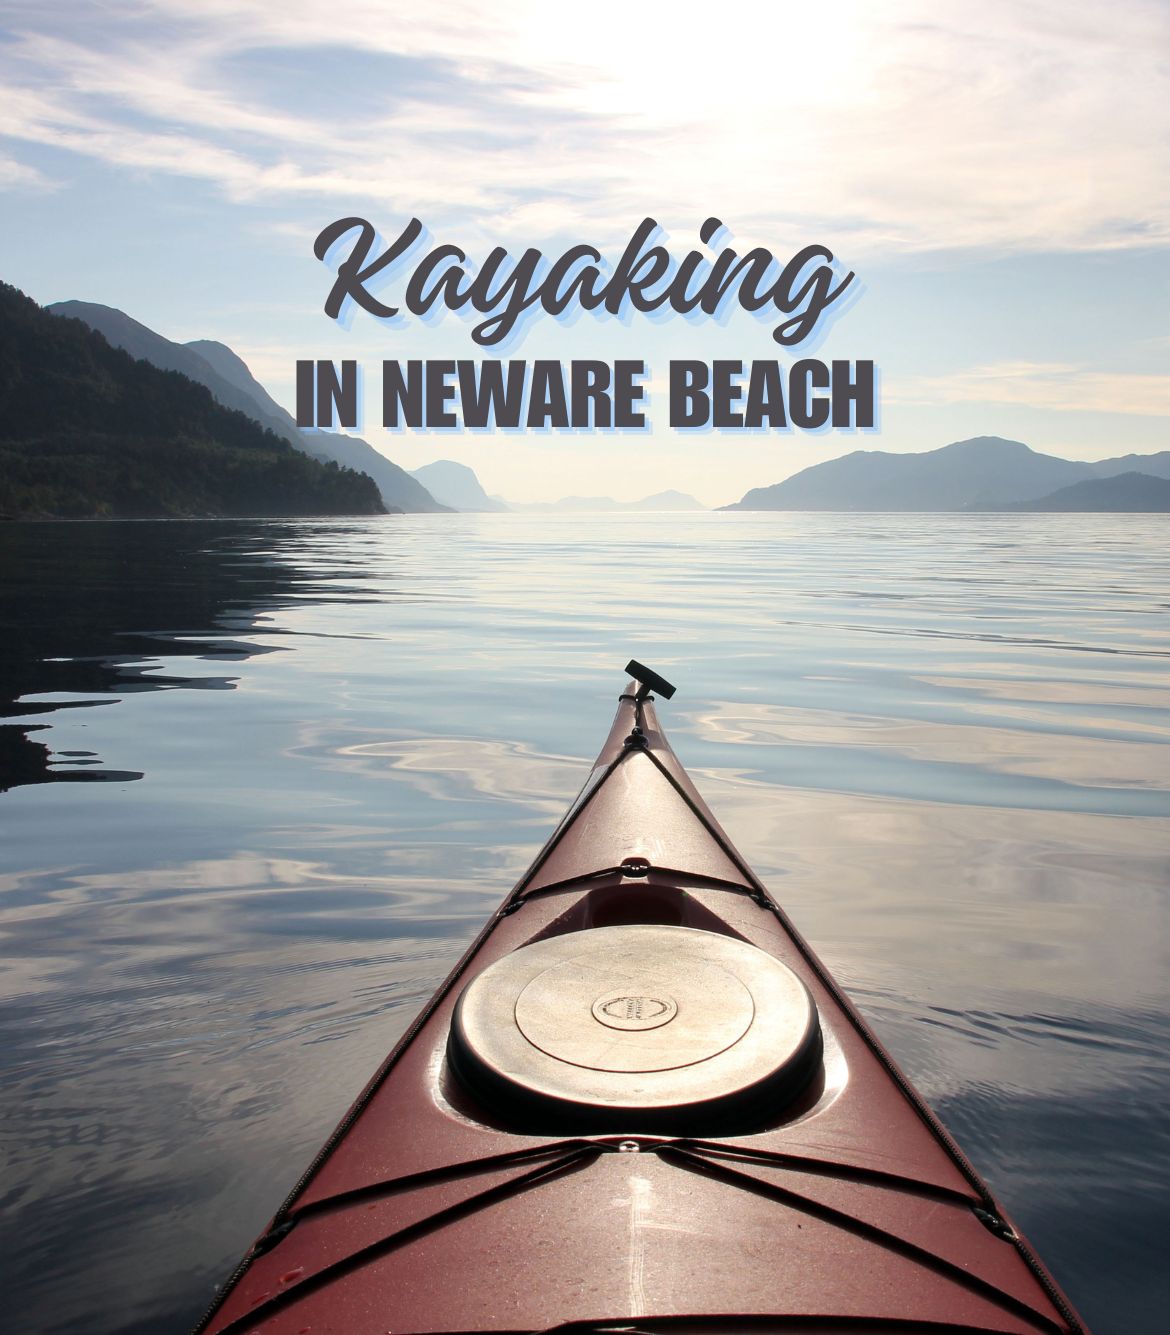 Kayaking in Nevare Beach